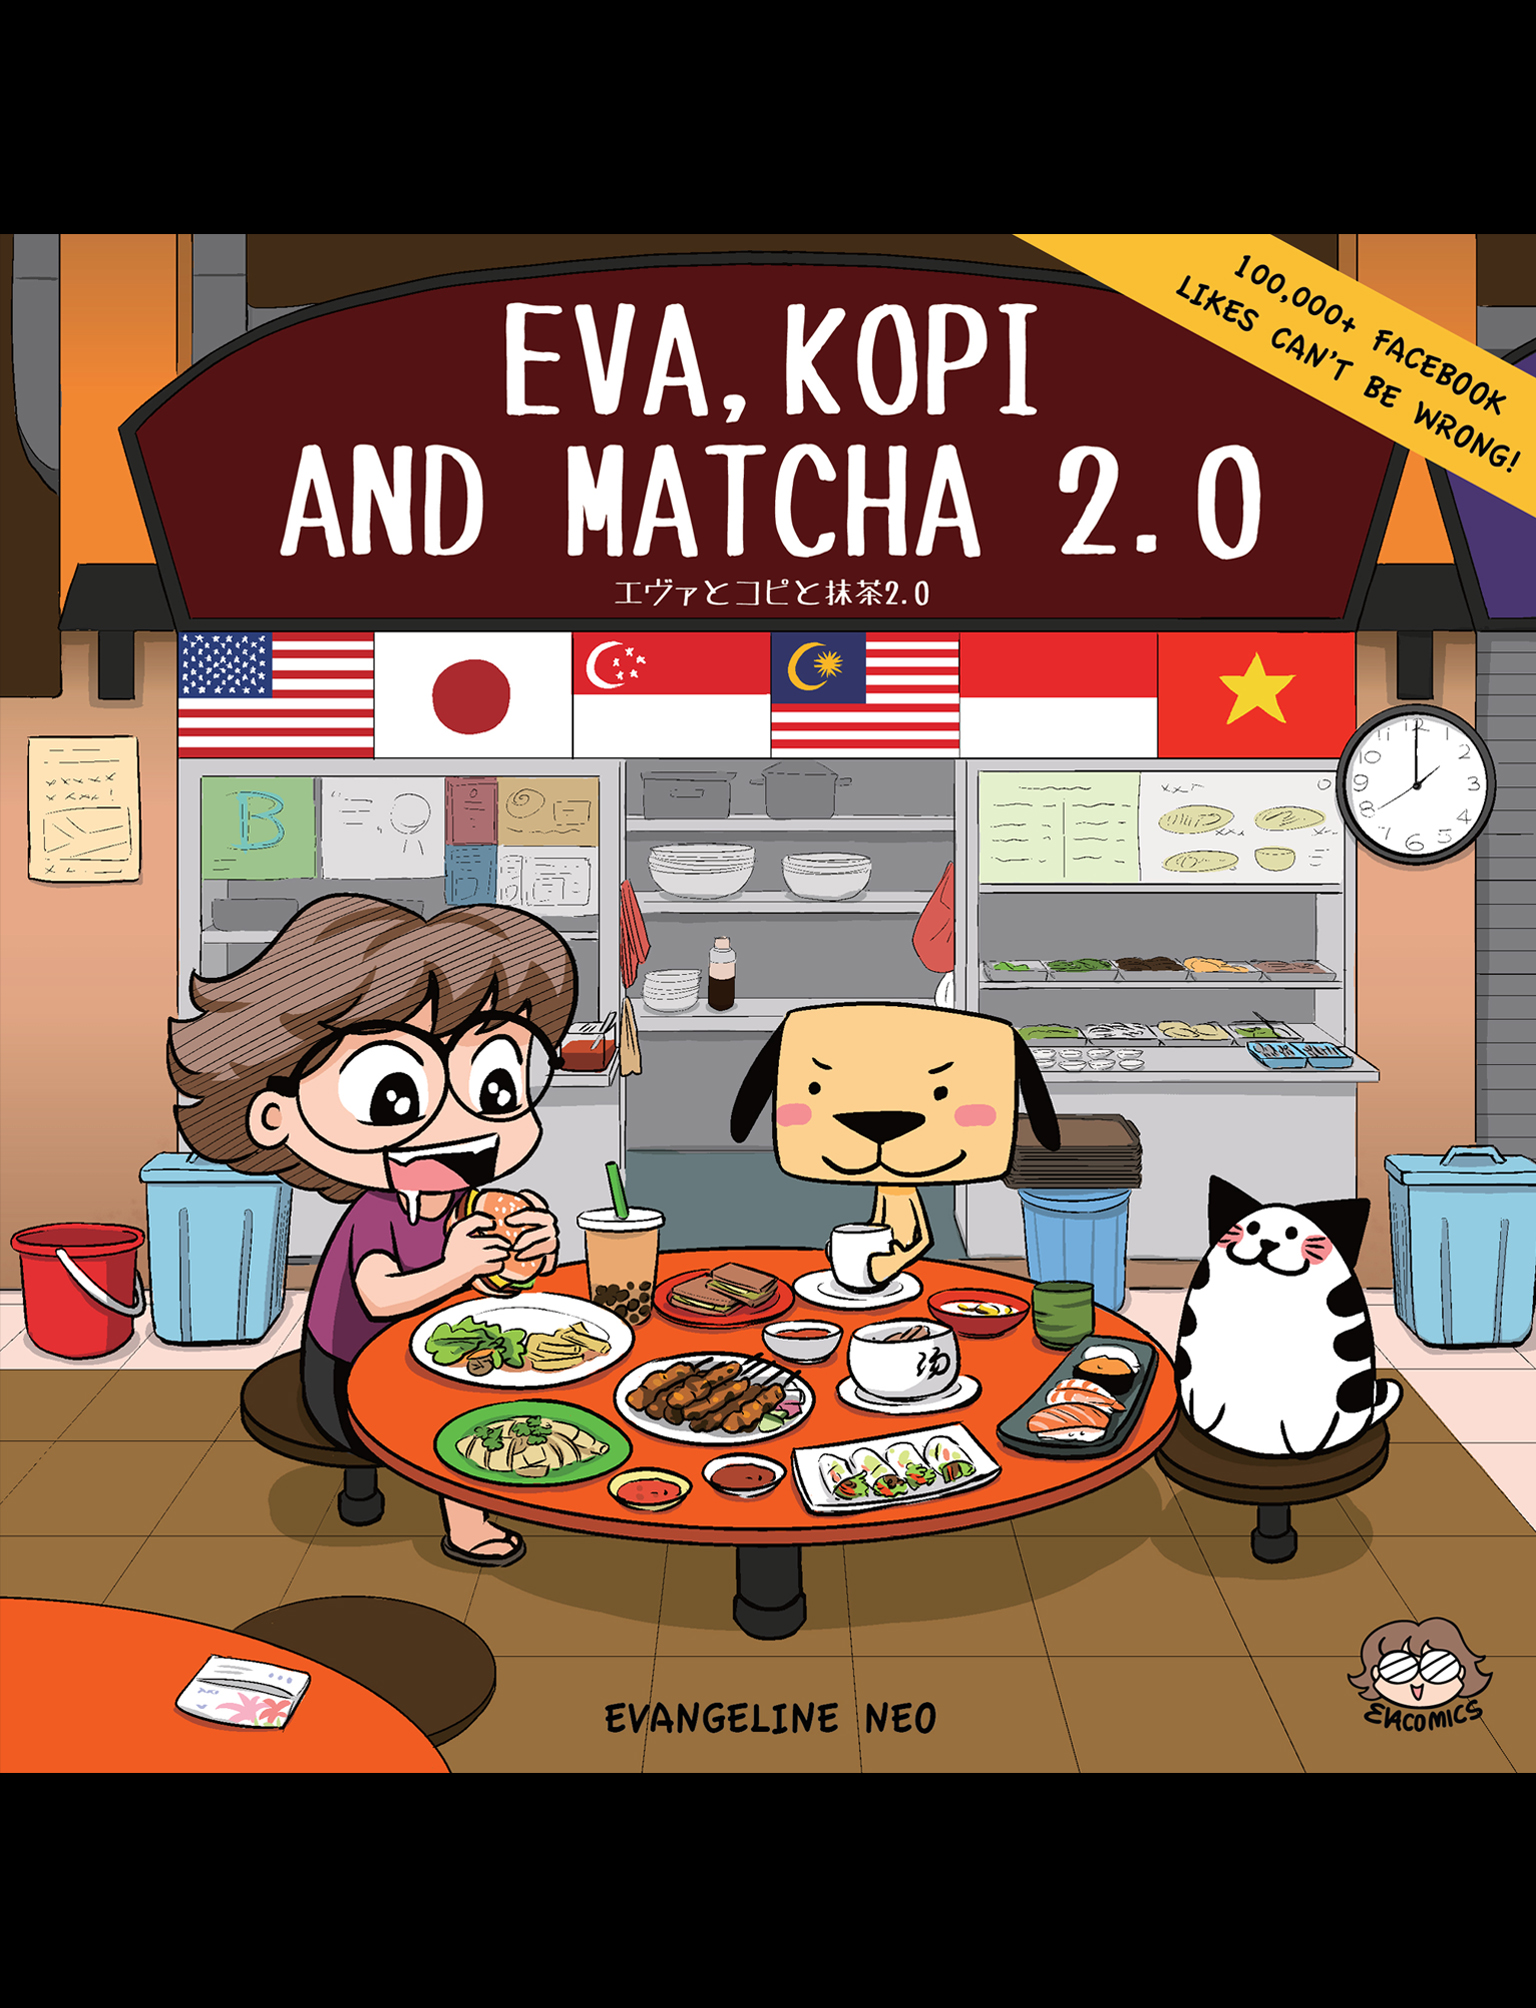 Eva, Kopi and Matcha 2.0